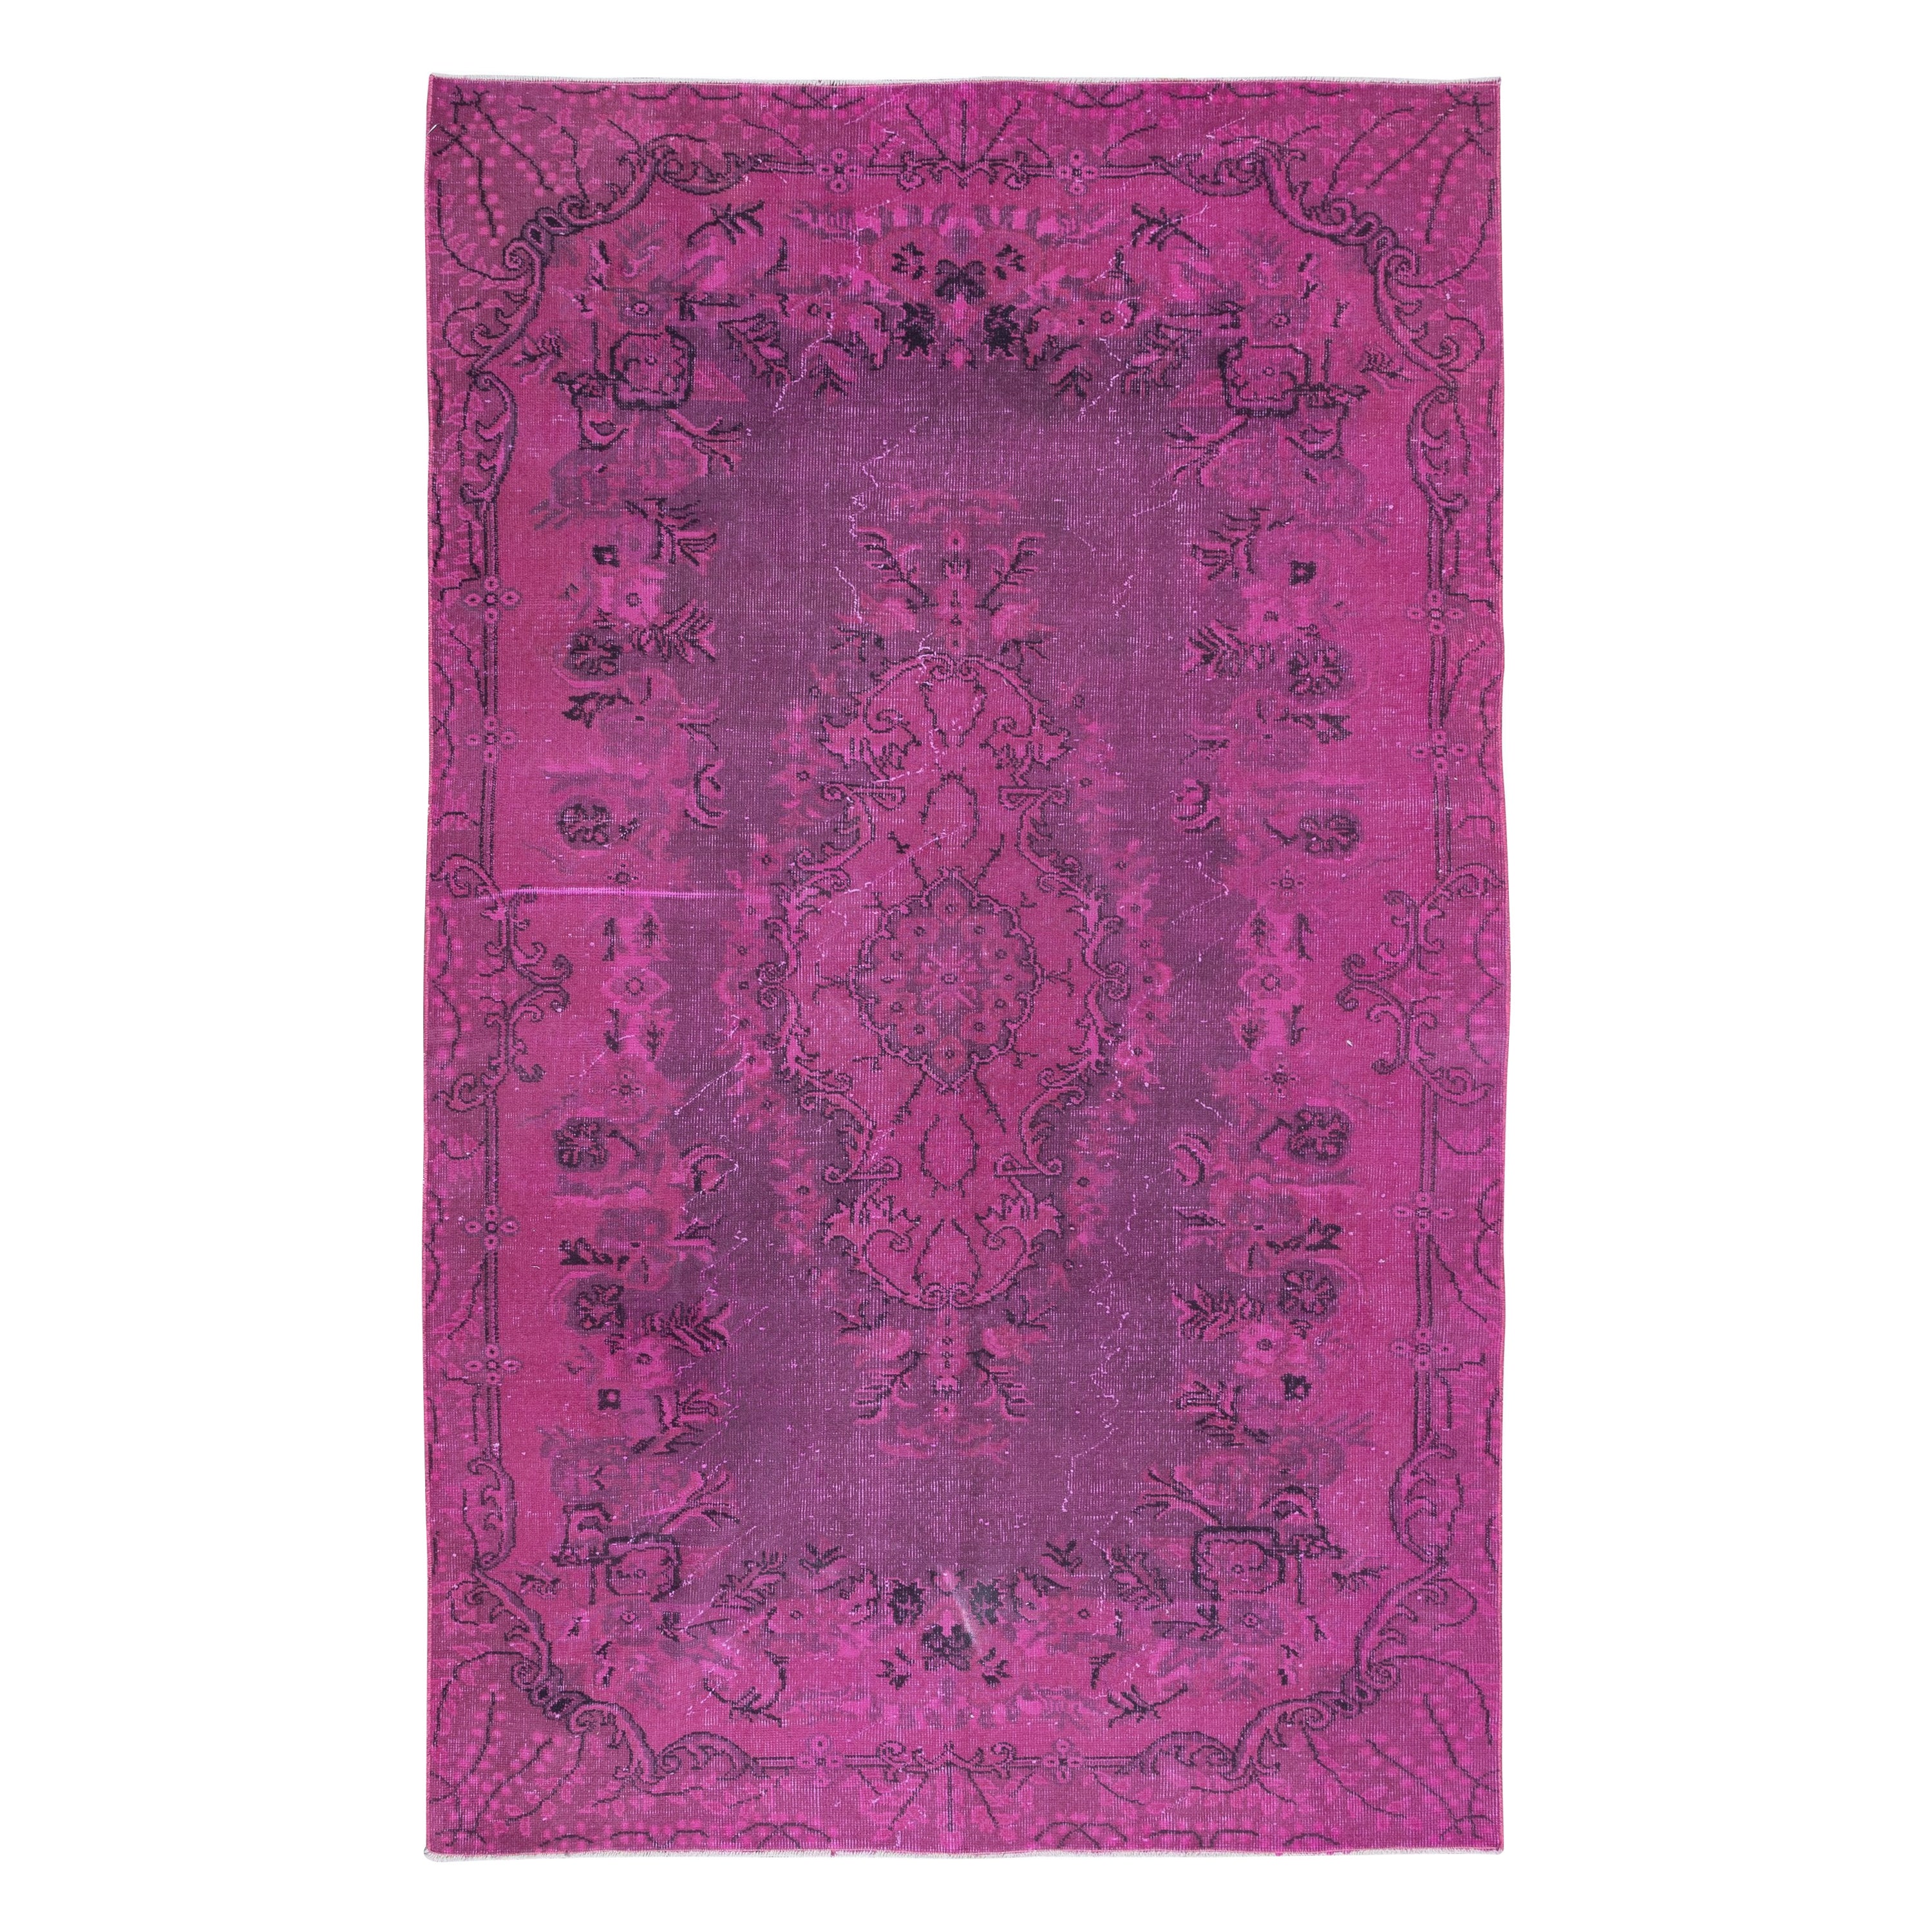 5.4x8.7 Ft Pink Handmade Modern Rug, Turkish Living Room Carpet with Medallion